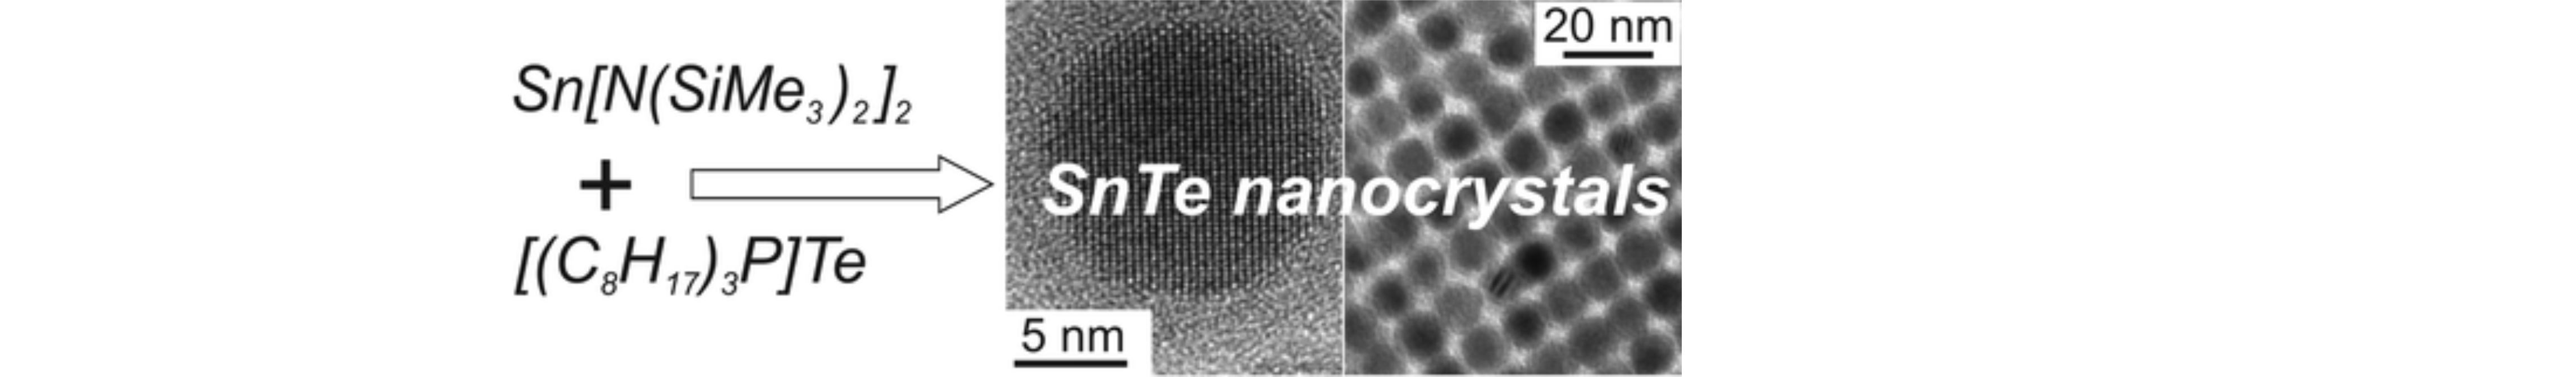 SnTe nanocrystals: a new example of narrow gap semiconductor quantum dots